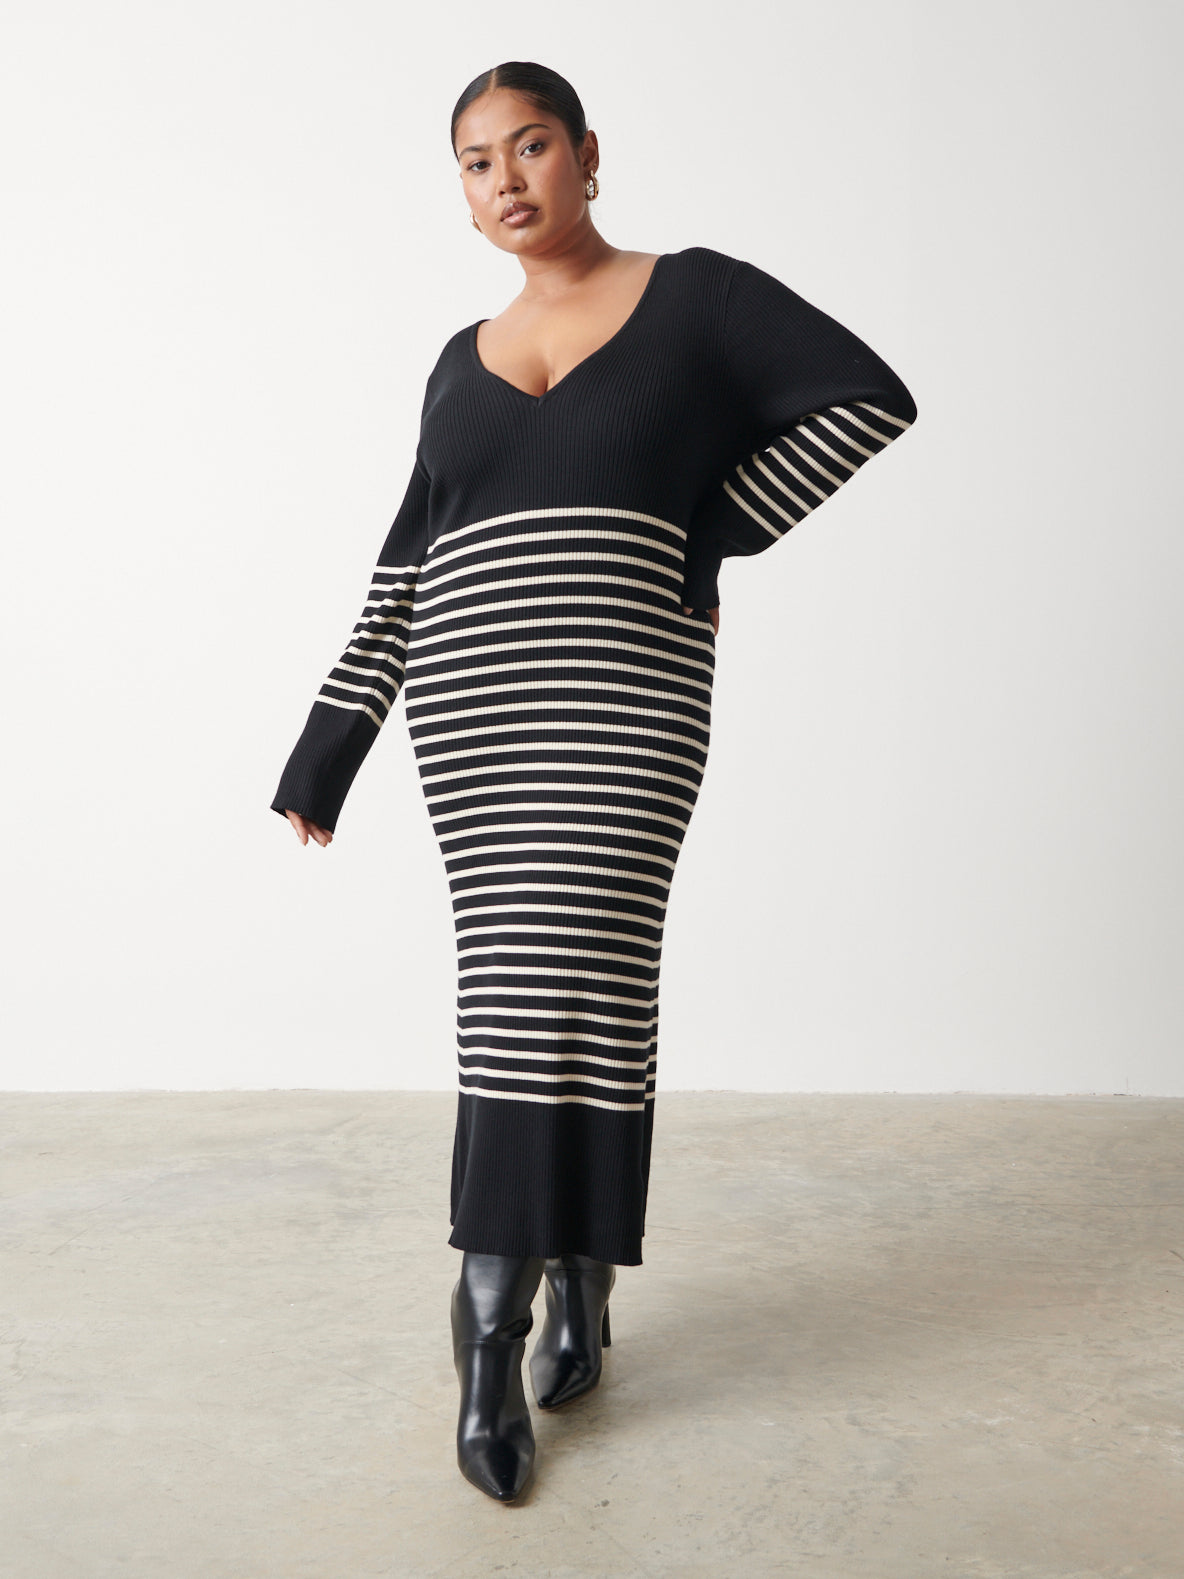 Vanessa Stripped Knit Dress Curve - Black and White Stripe, XXL